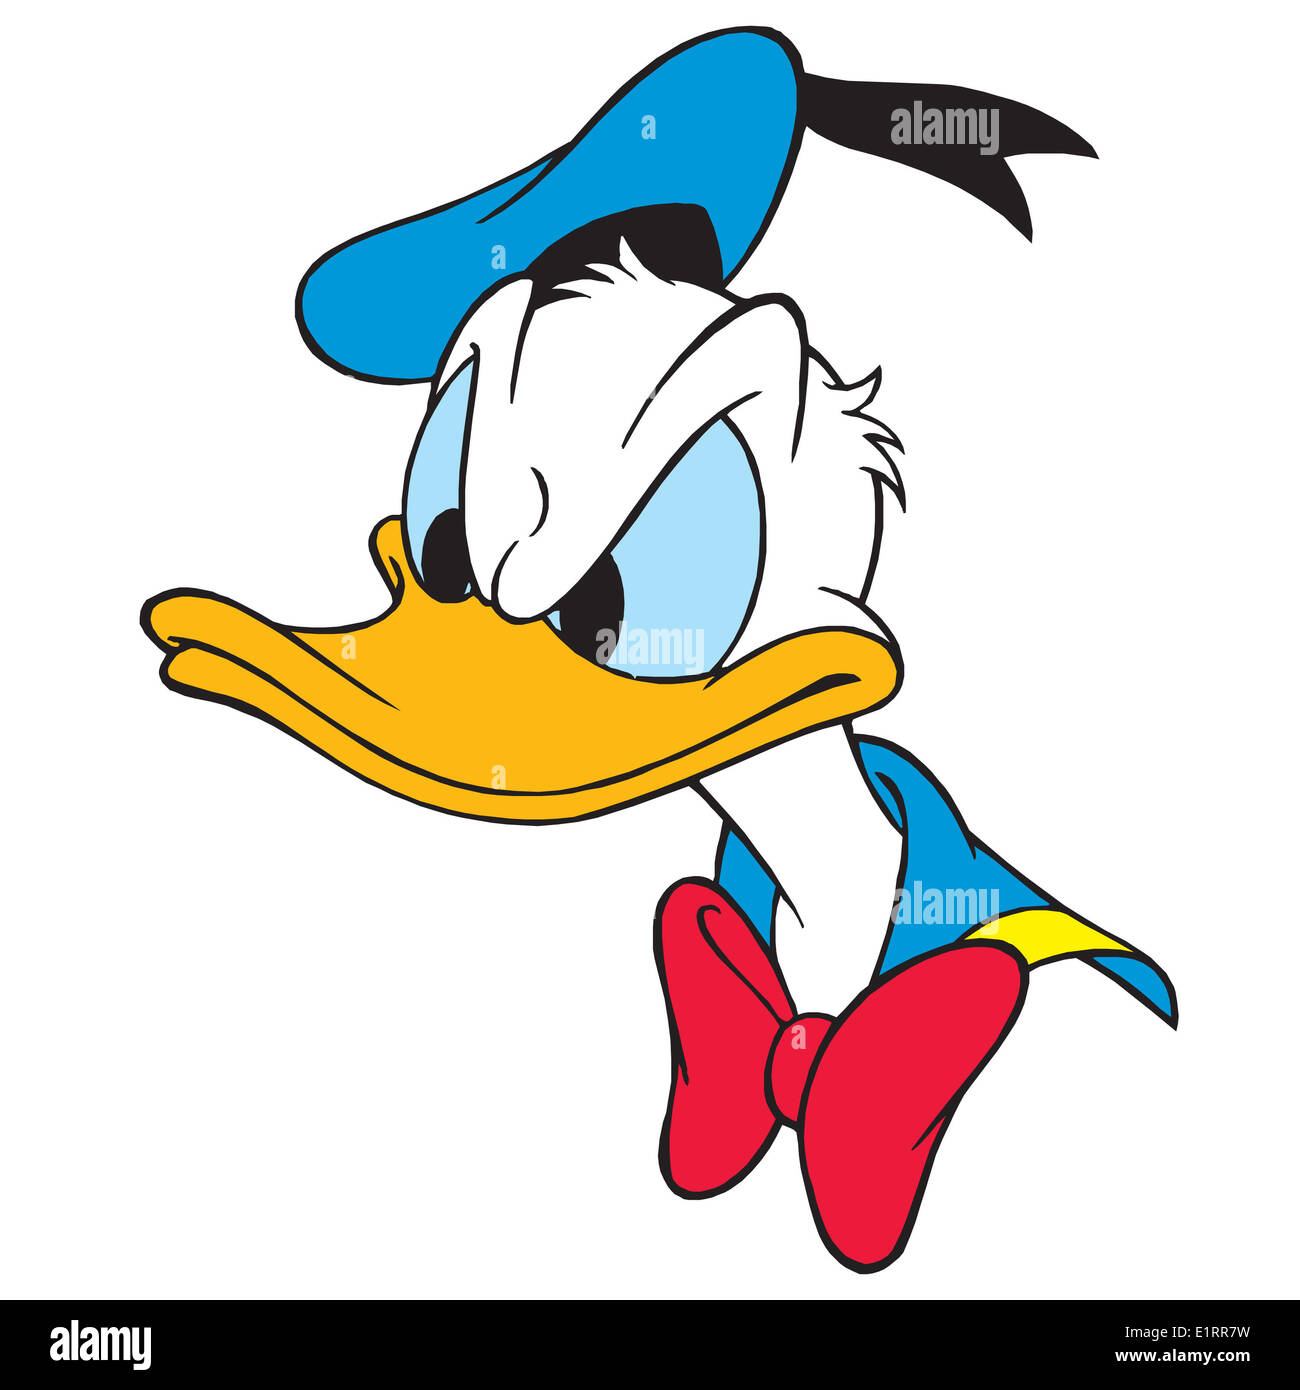 Disney cartoon donald duck hi-res stock photography and images - Alamy